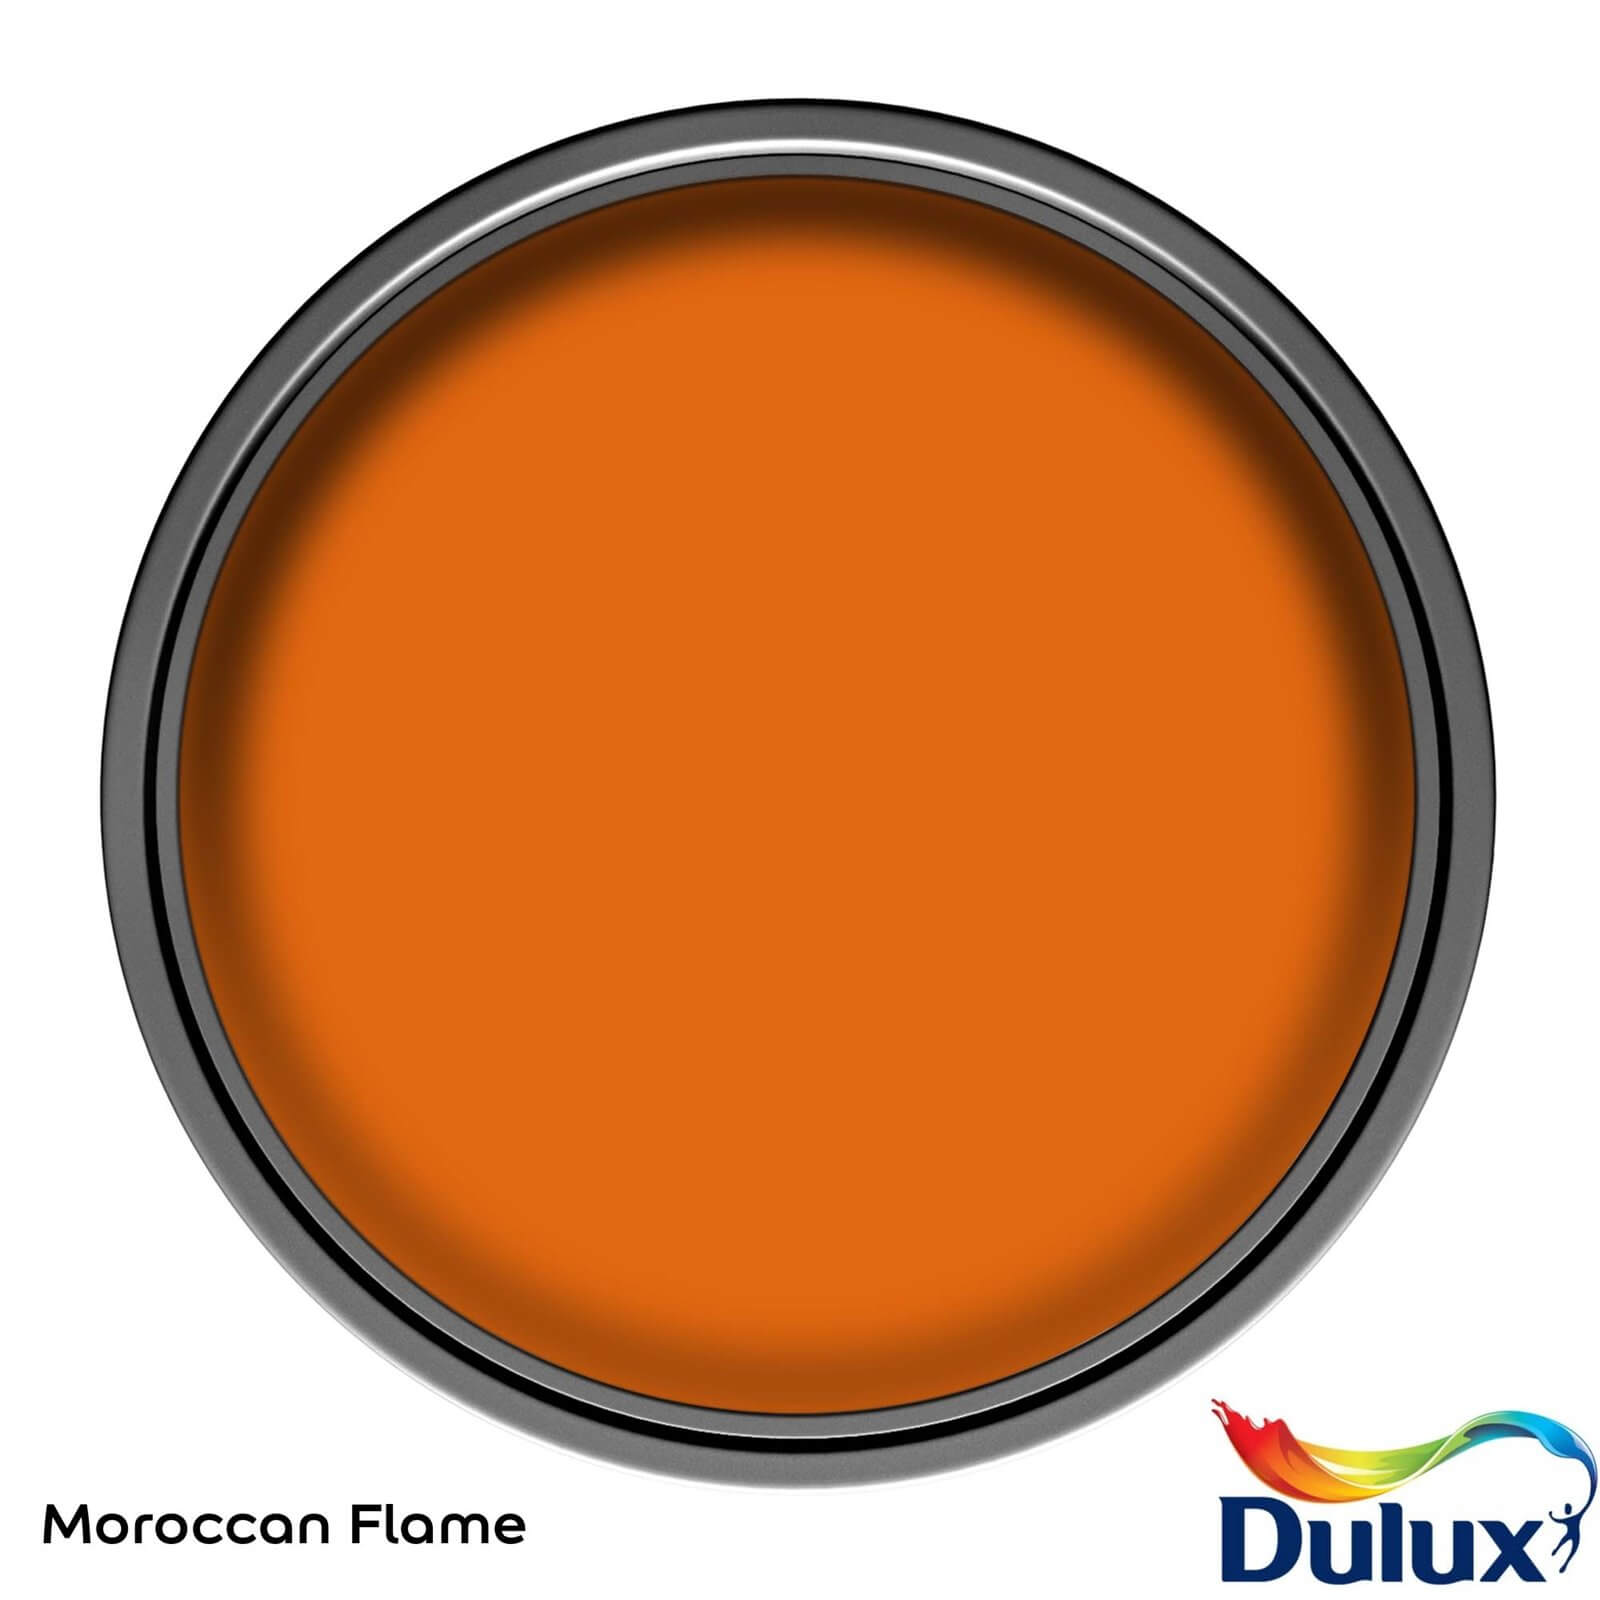 Dulux Feature Wall Moroccan Flame - Matt Paint - 1.25L